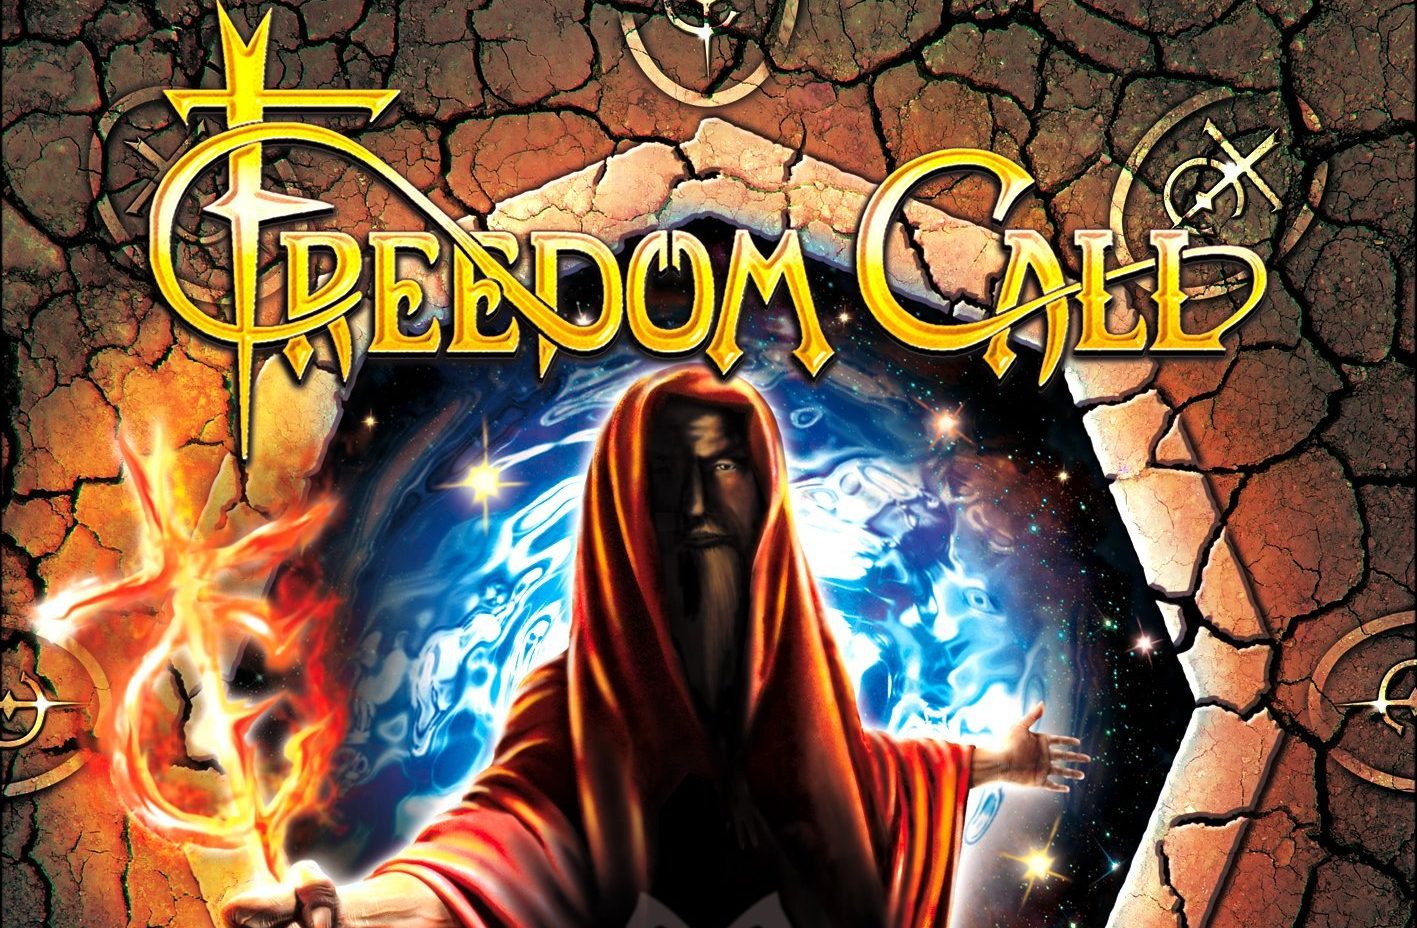 FREEDOM CALL – BEYOND